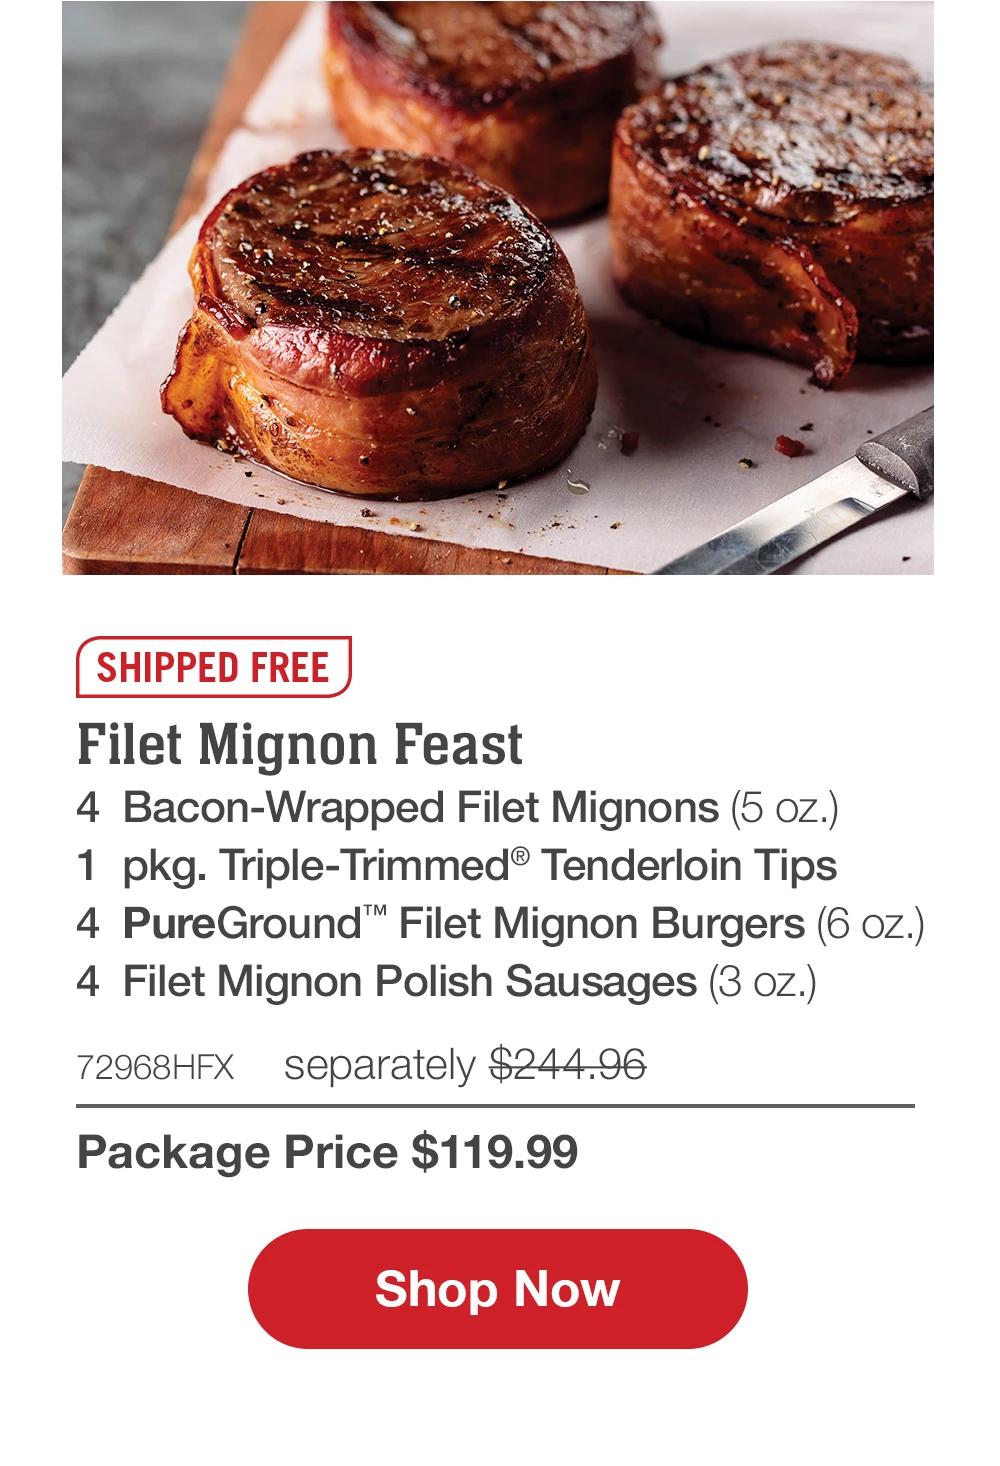 SHIPPED FREE | Filet Mignon Feast - 4 Bacon-Wrapped Filet Mignons (5 oz.) - 1 pkg. Triple-Trimmed® Tenderloin Tips - 4 PureGround™ Filet Mignon Burgers (6 oz.) - 4 Filet Mignon Polish Sausages (3 oz.) - 72968HFX separately $244.96 | Package Price $119.99 || Shop Now